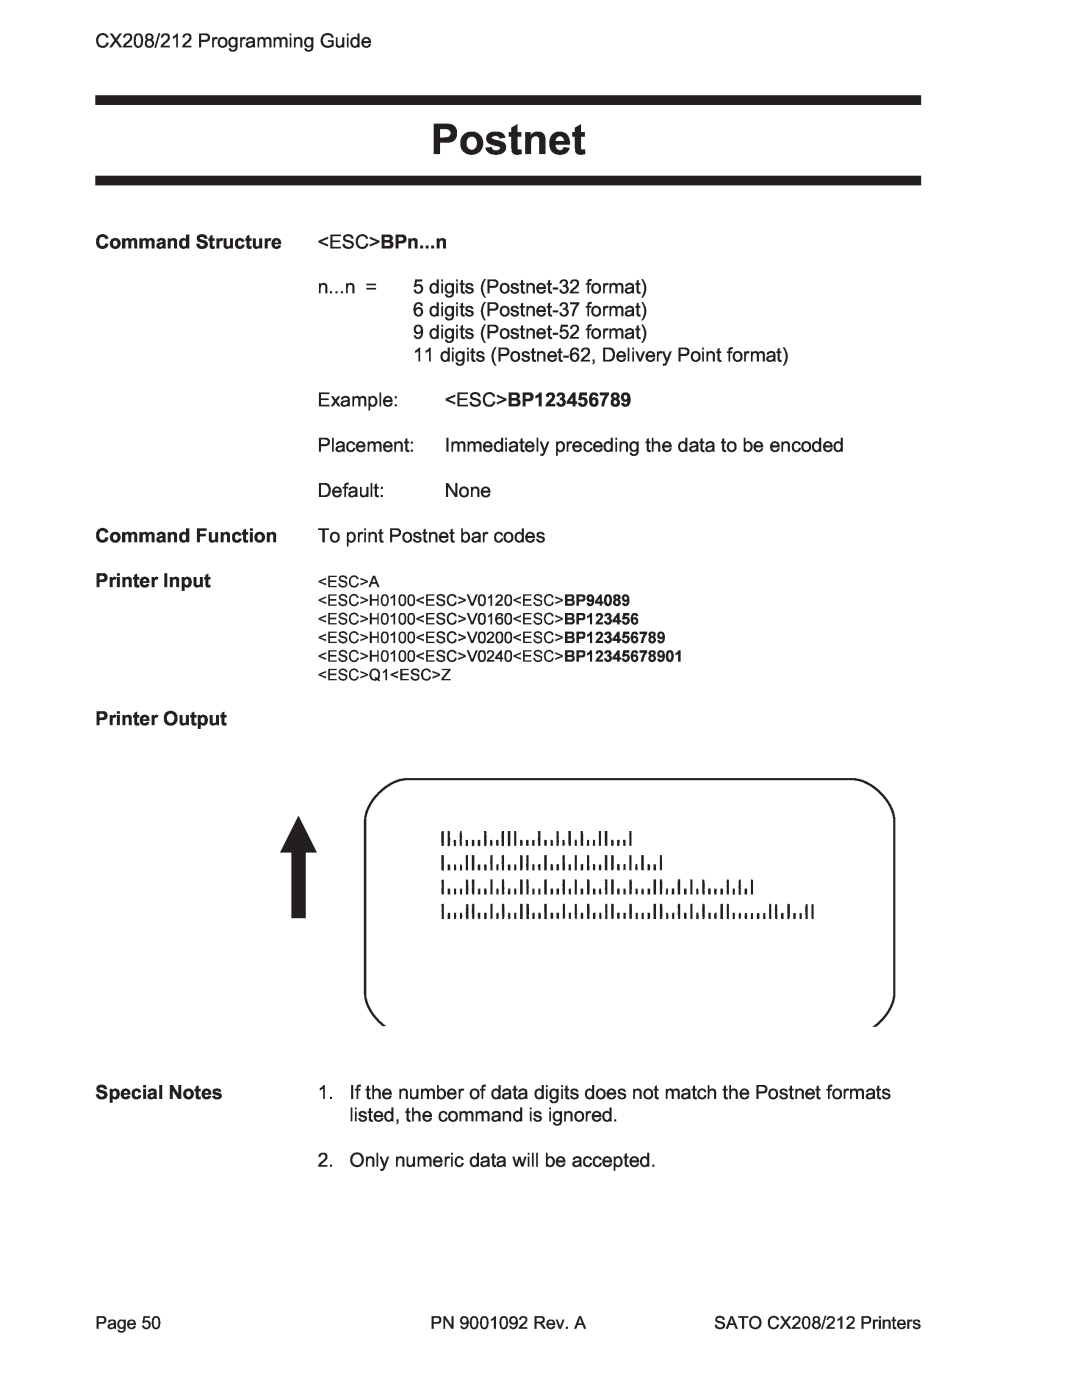 SATO CX208/212 manual Postnet, Command Structure ESCBPn...n, Printer Input, Printer Output, Special Notes 